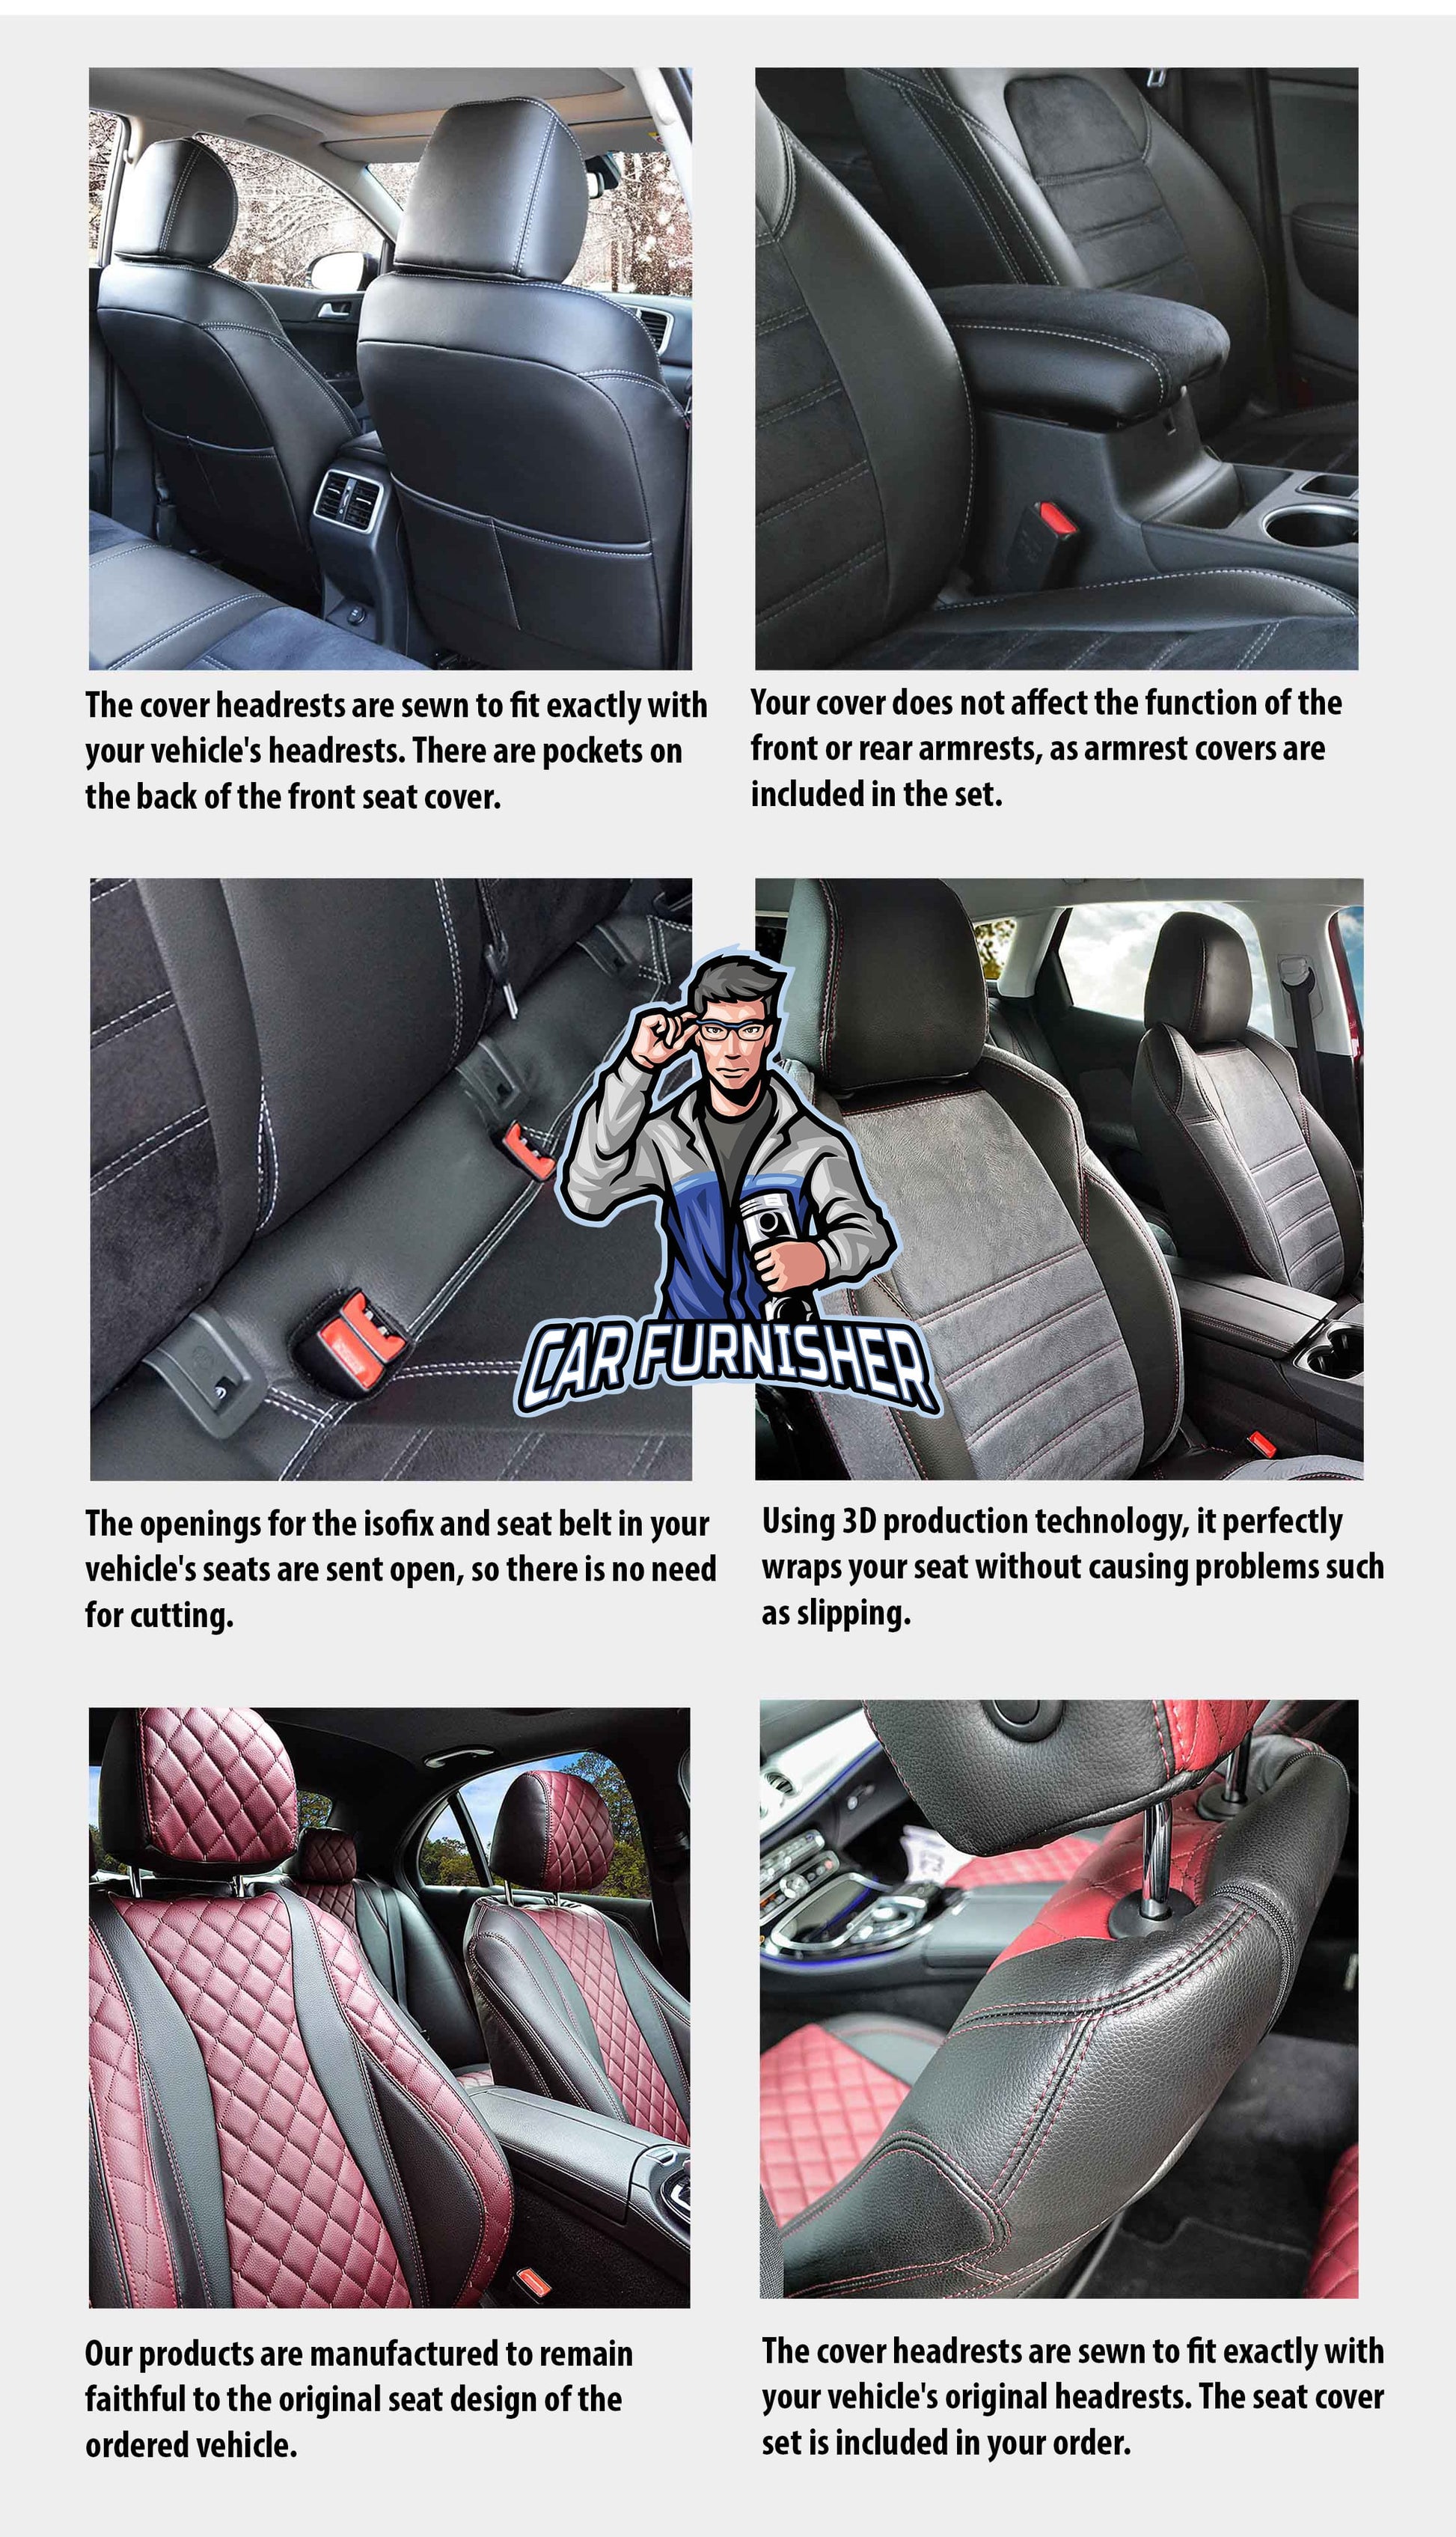 Fiat Doblo Seat Covers Paris Leather & Jacquard Design Black Leather & Jacquard Fabric